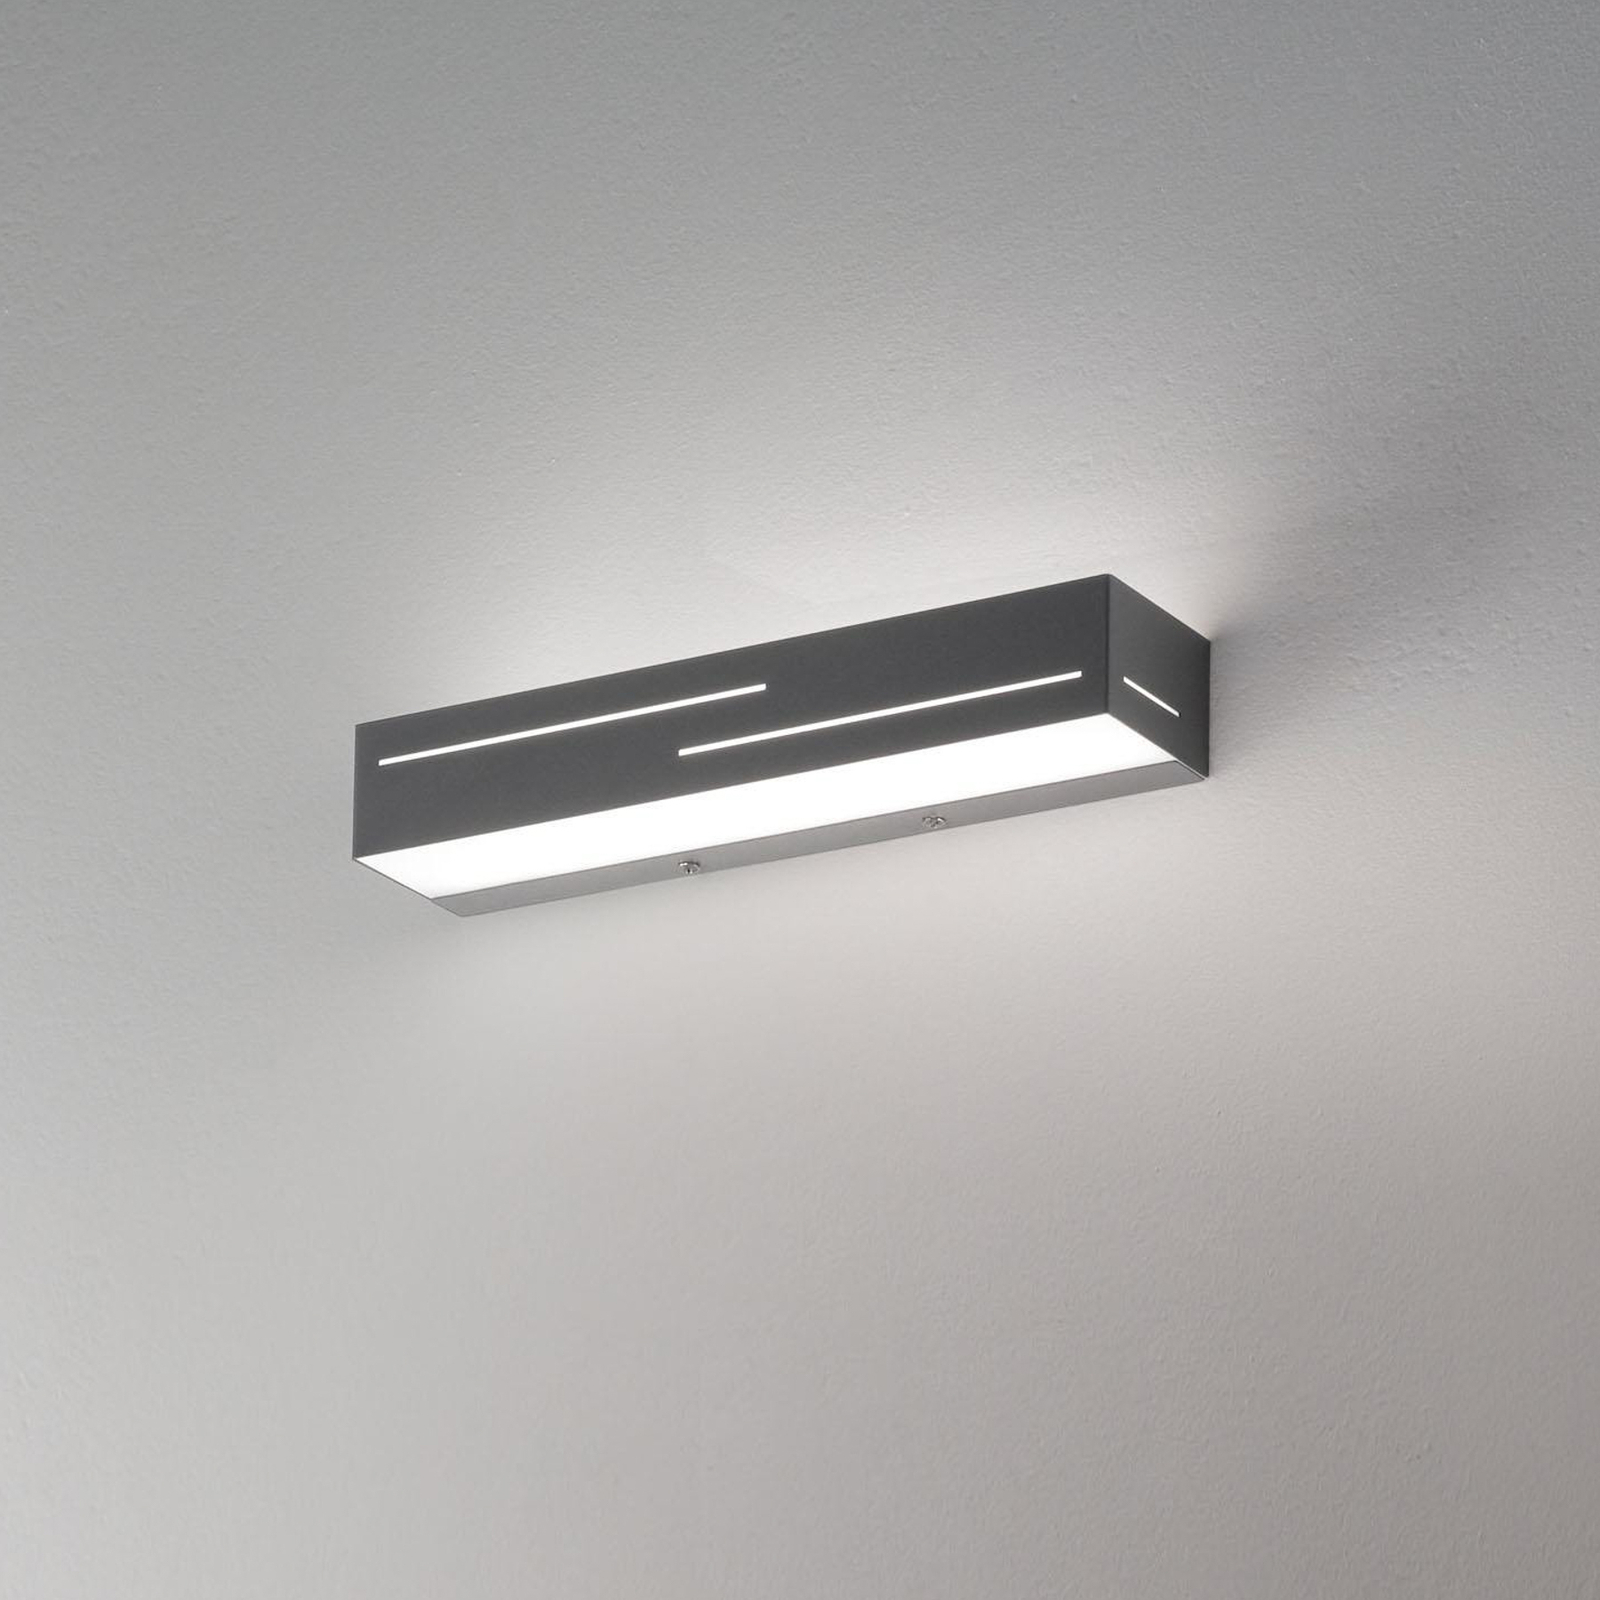 LED stenska svetilka Banny, antracit, širina 31 cm, Up- & Downlight